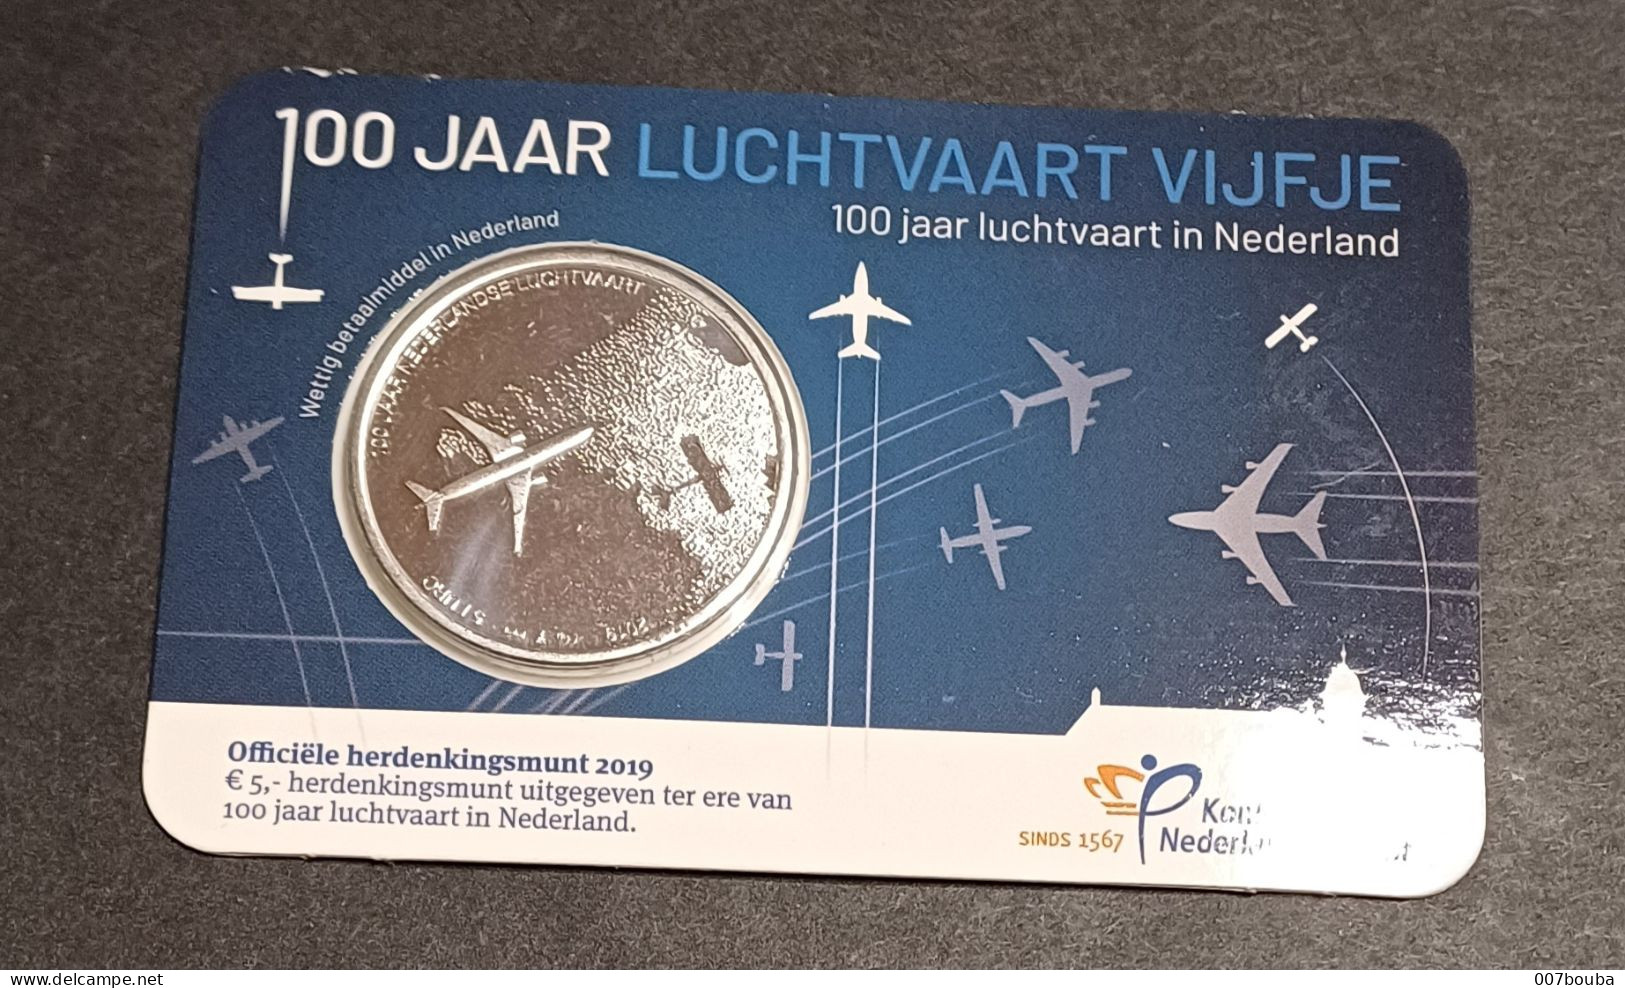 NEDERLAND _ PAYS-BAS 2019 / COINCARD 5 €  / 100 JAAR LUCHTVAART VIJFJE / ETAT NEUF! - Paises Bajos